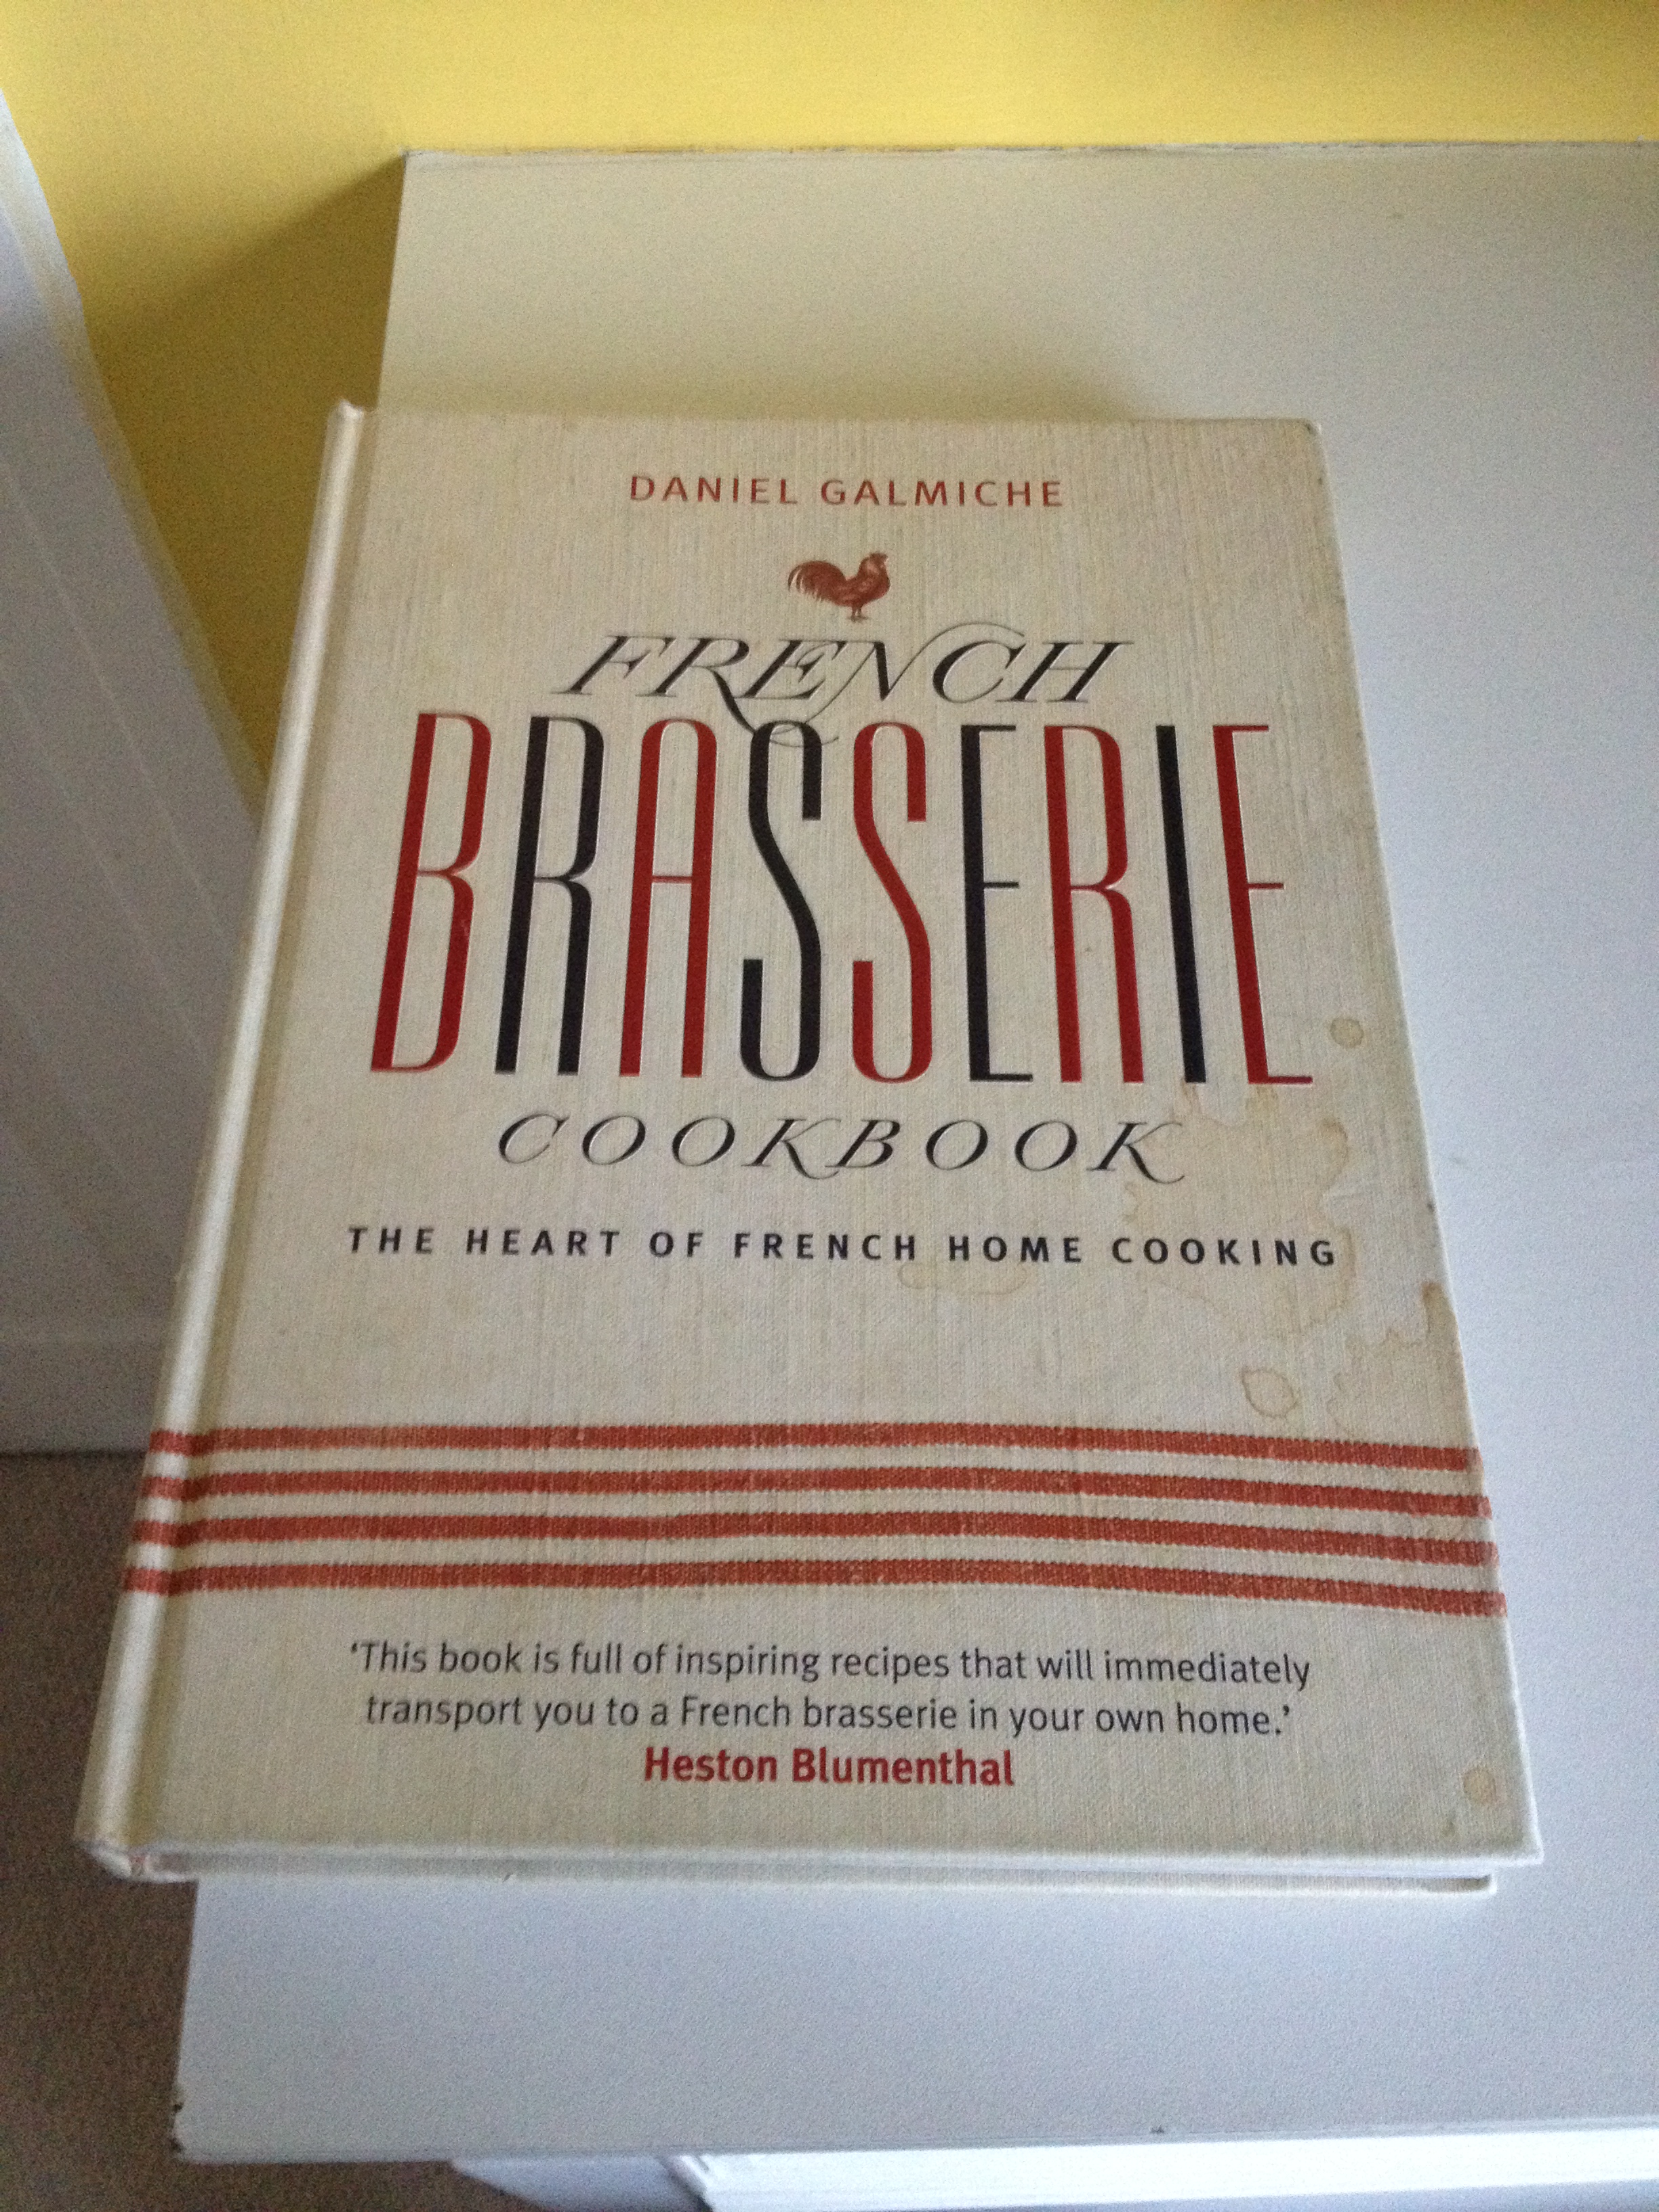 French Brasserie cookbook by Daniel Galmiche